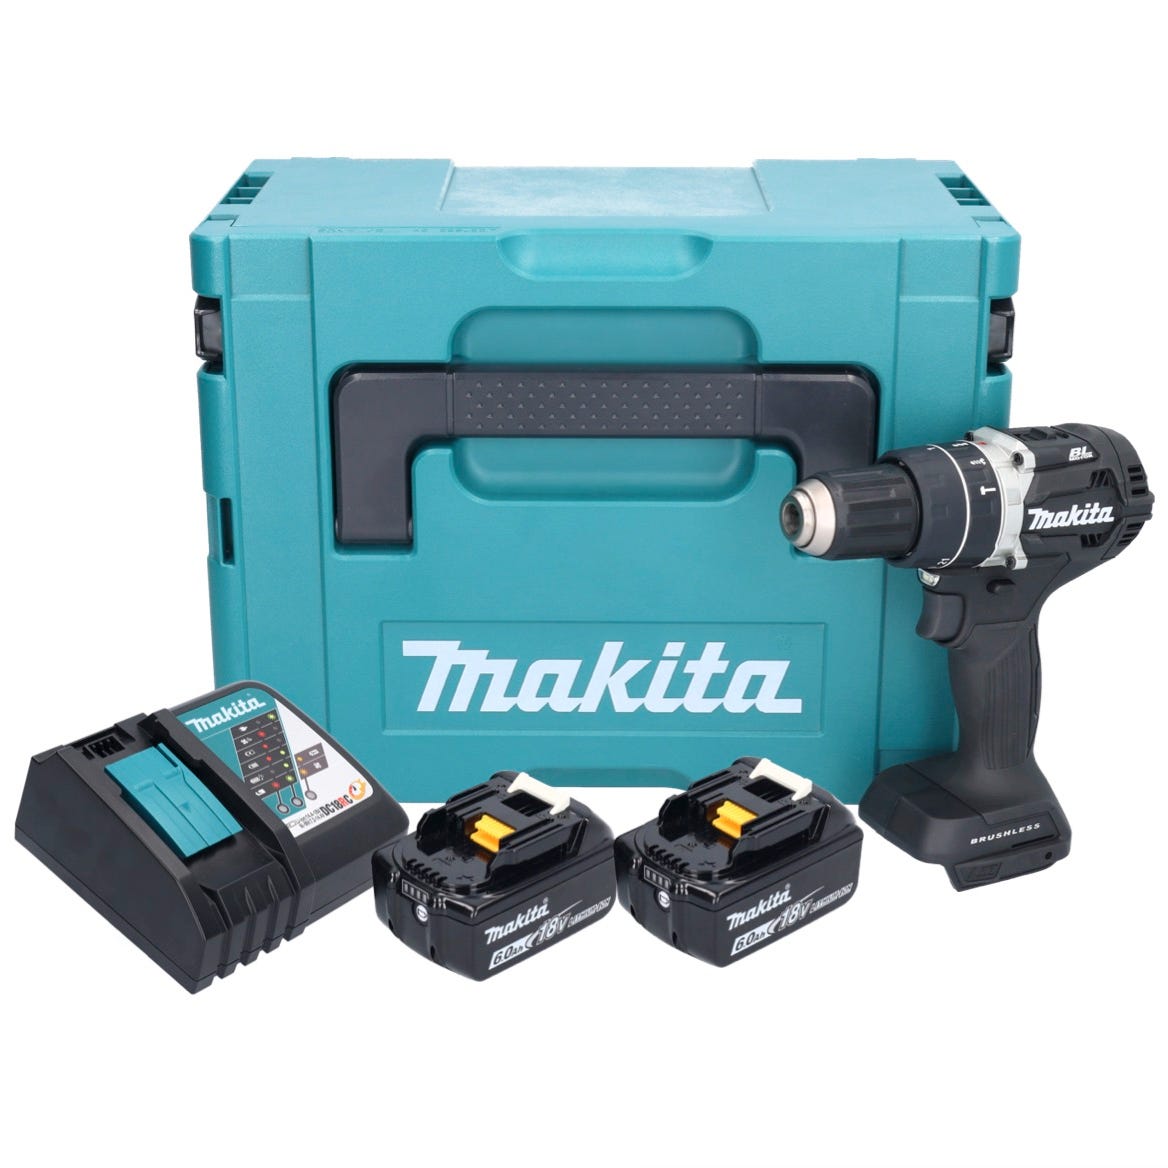 Makita DHP 484 RGJB Perceuse-visseuse à percussion sans fil 18 V 54 Nm Brushless noir + 2x batterie 6,0 Ah + chargeur + Makpac 0